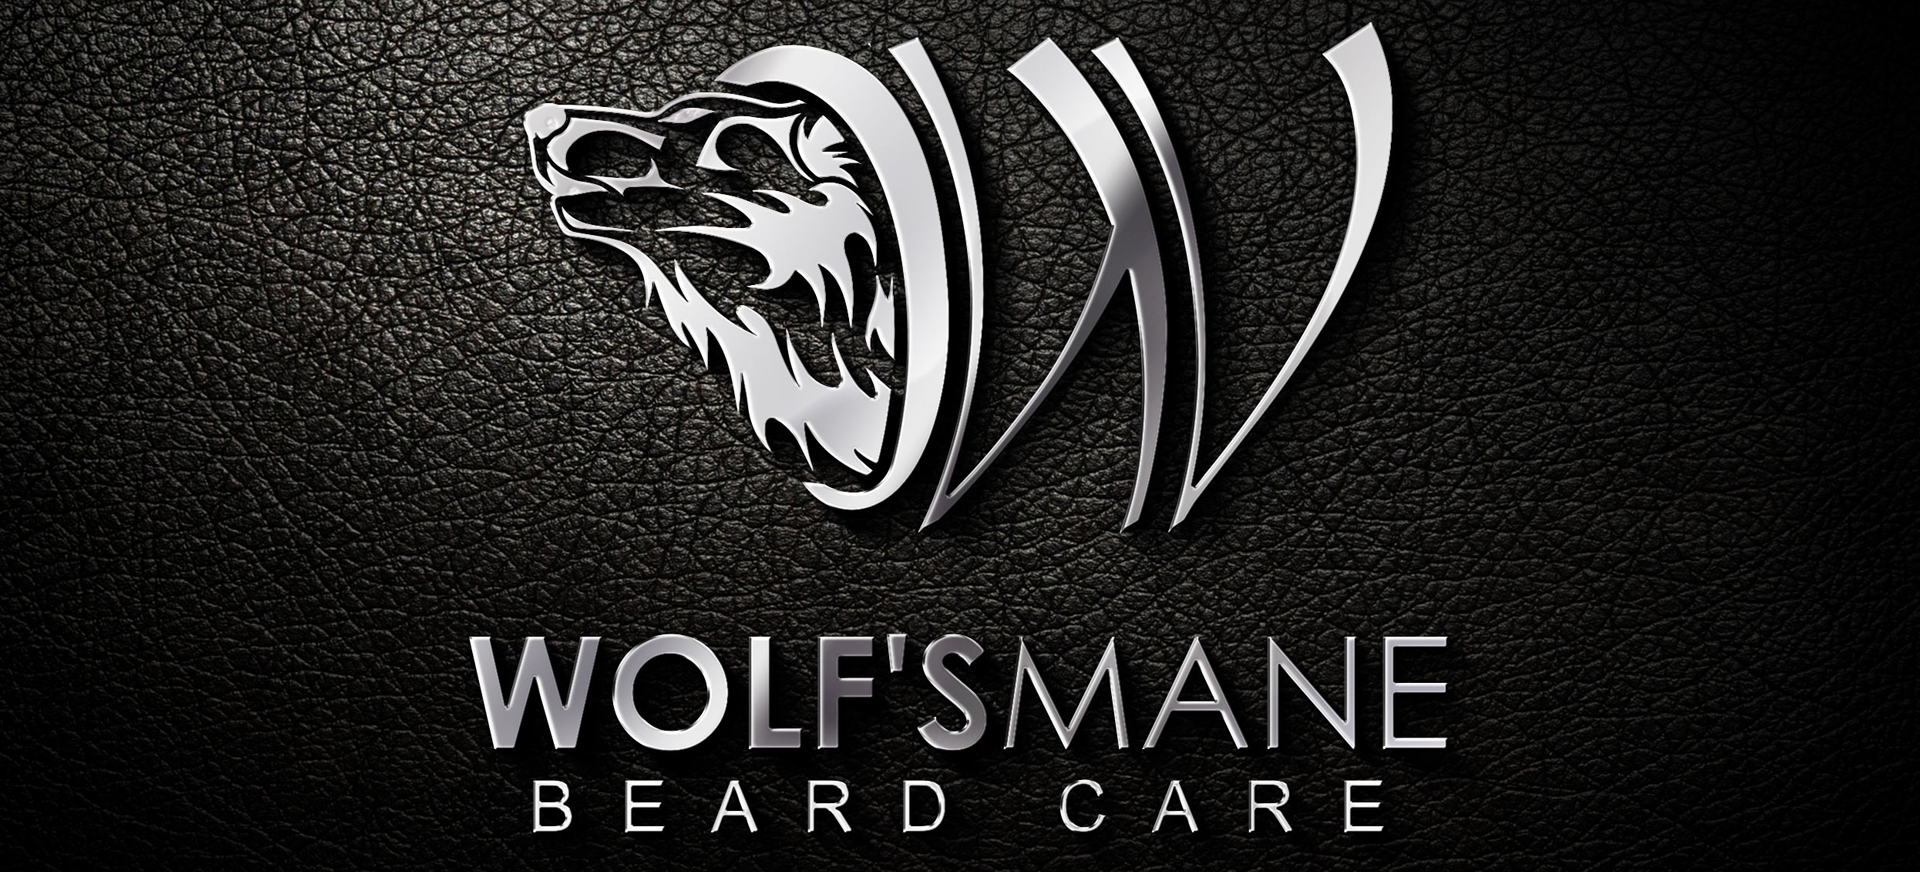 Welcome to Wolf's Mane Beard Care!